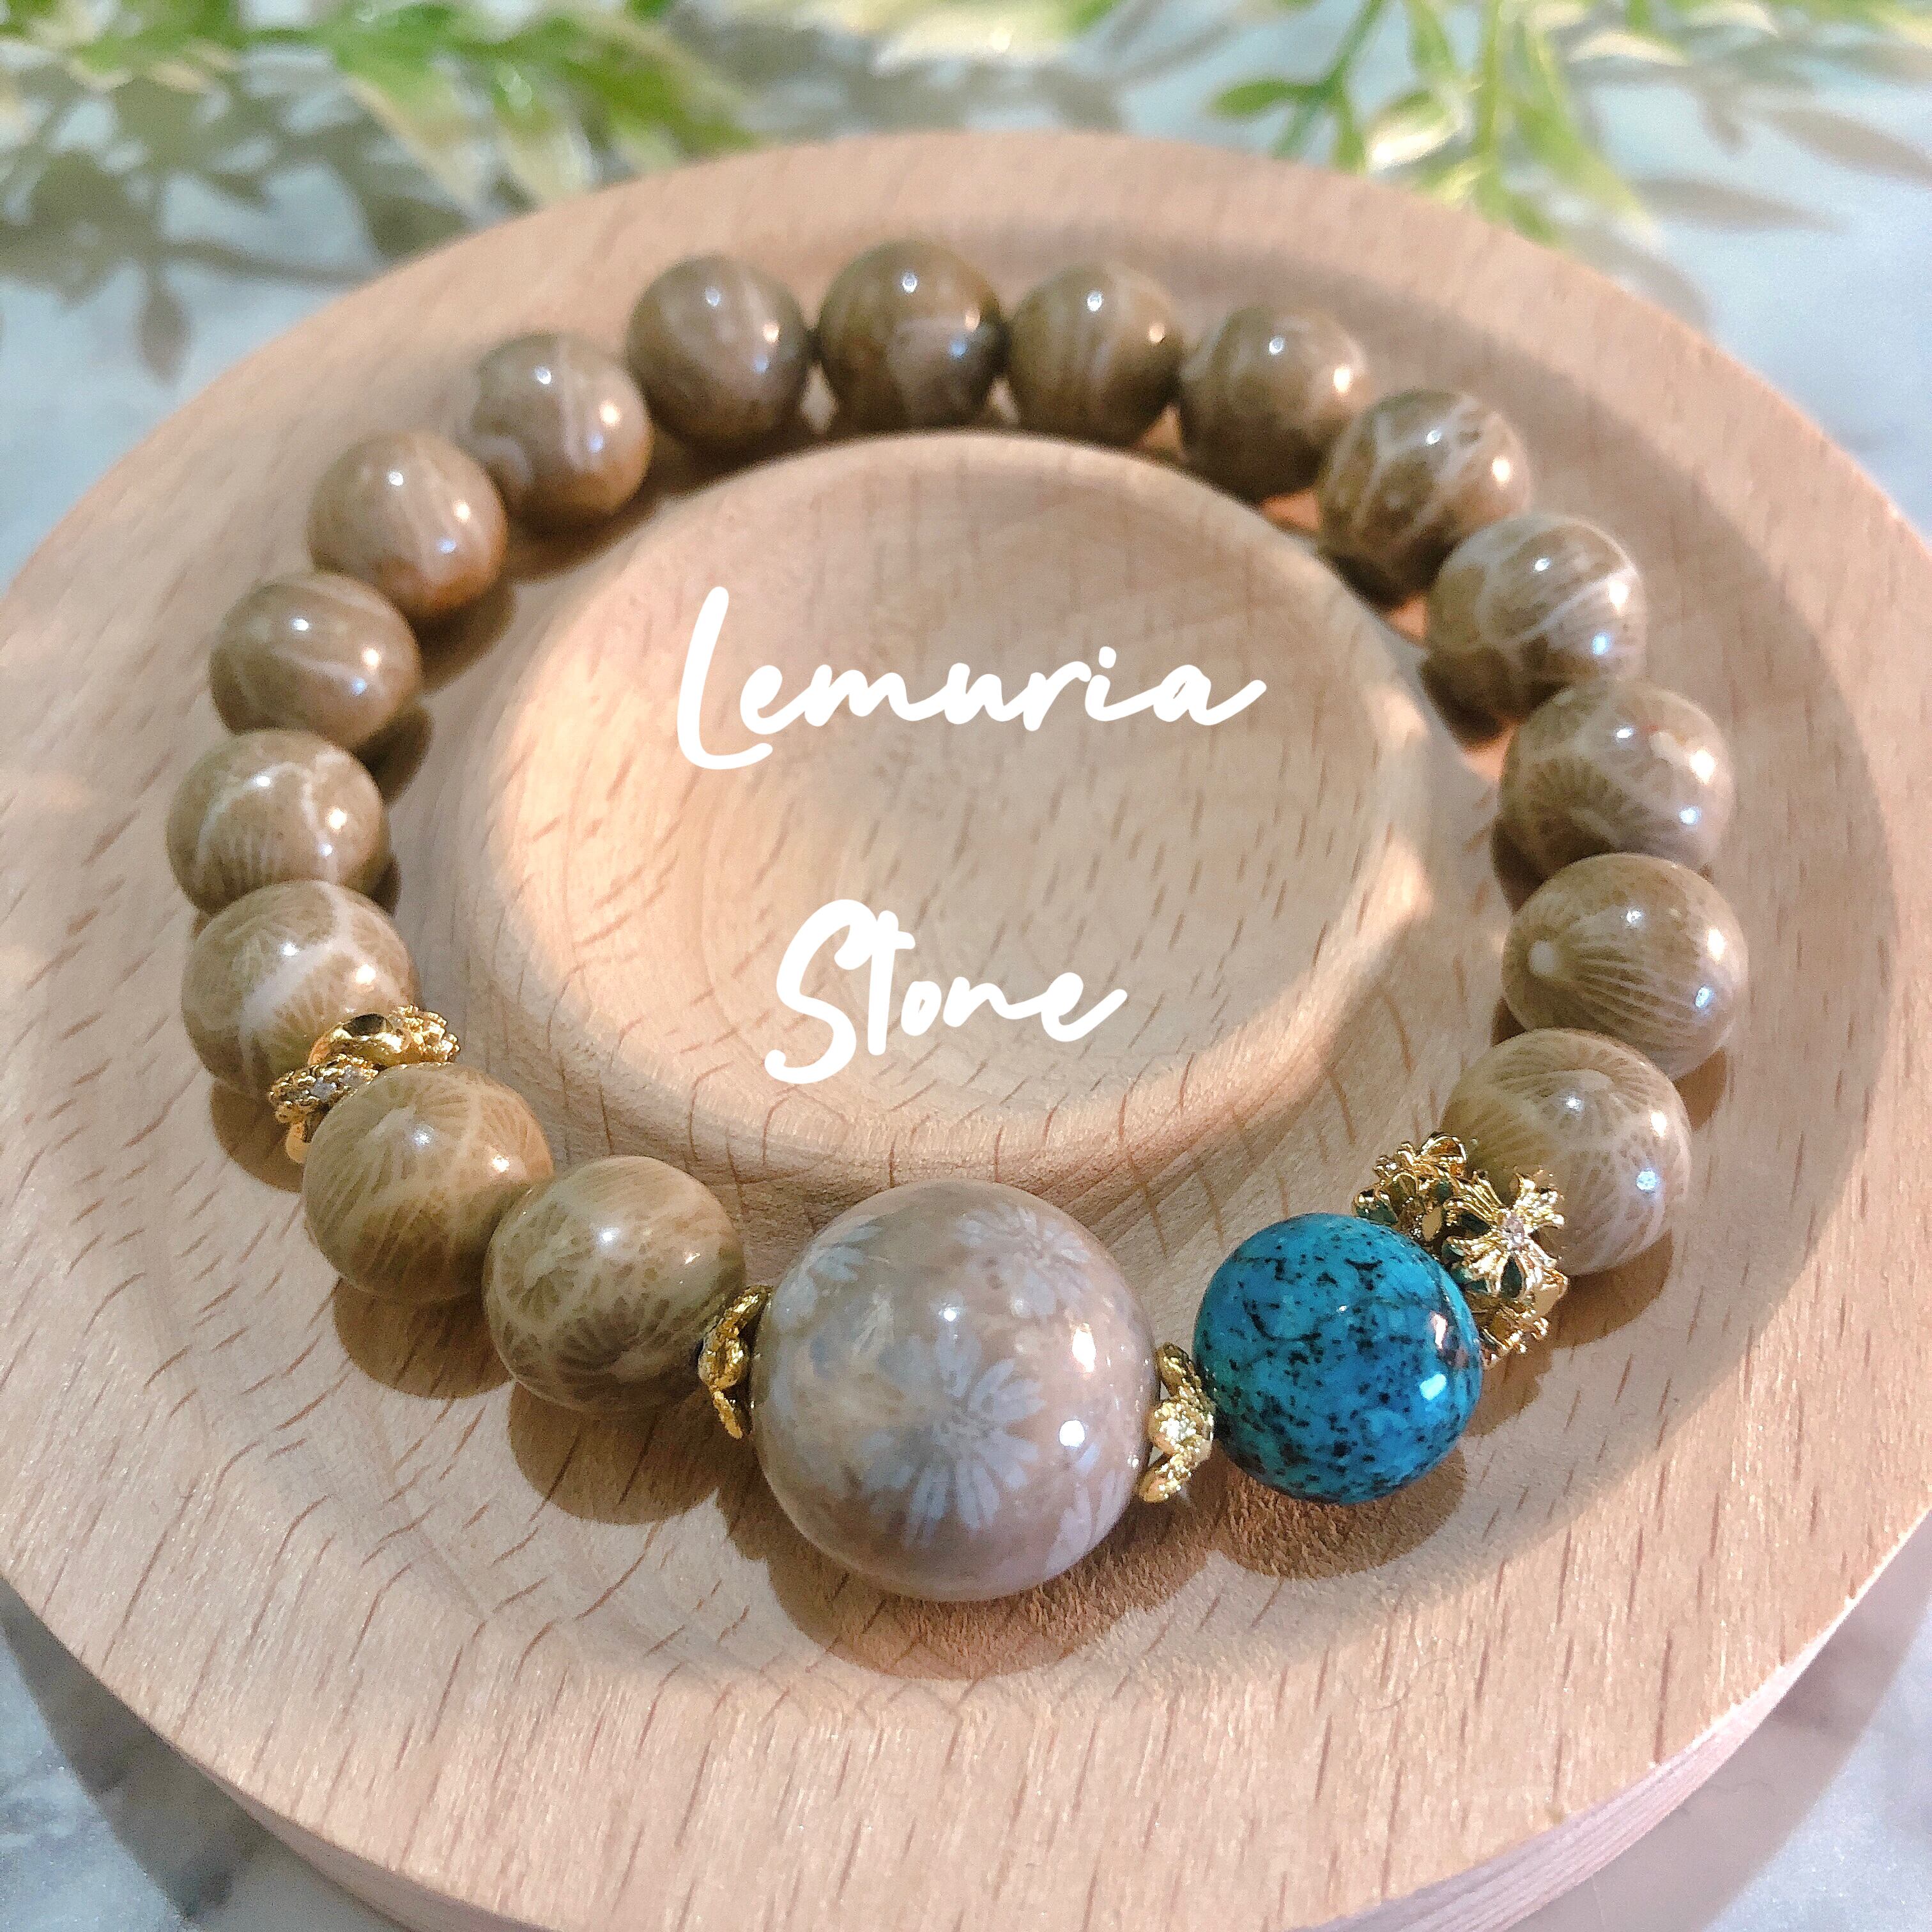 Lemuria Stone